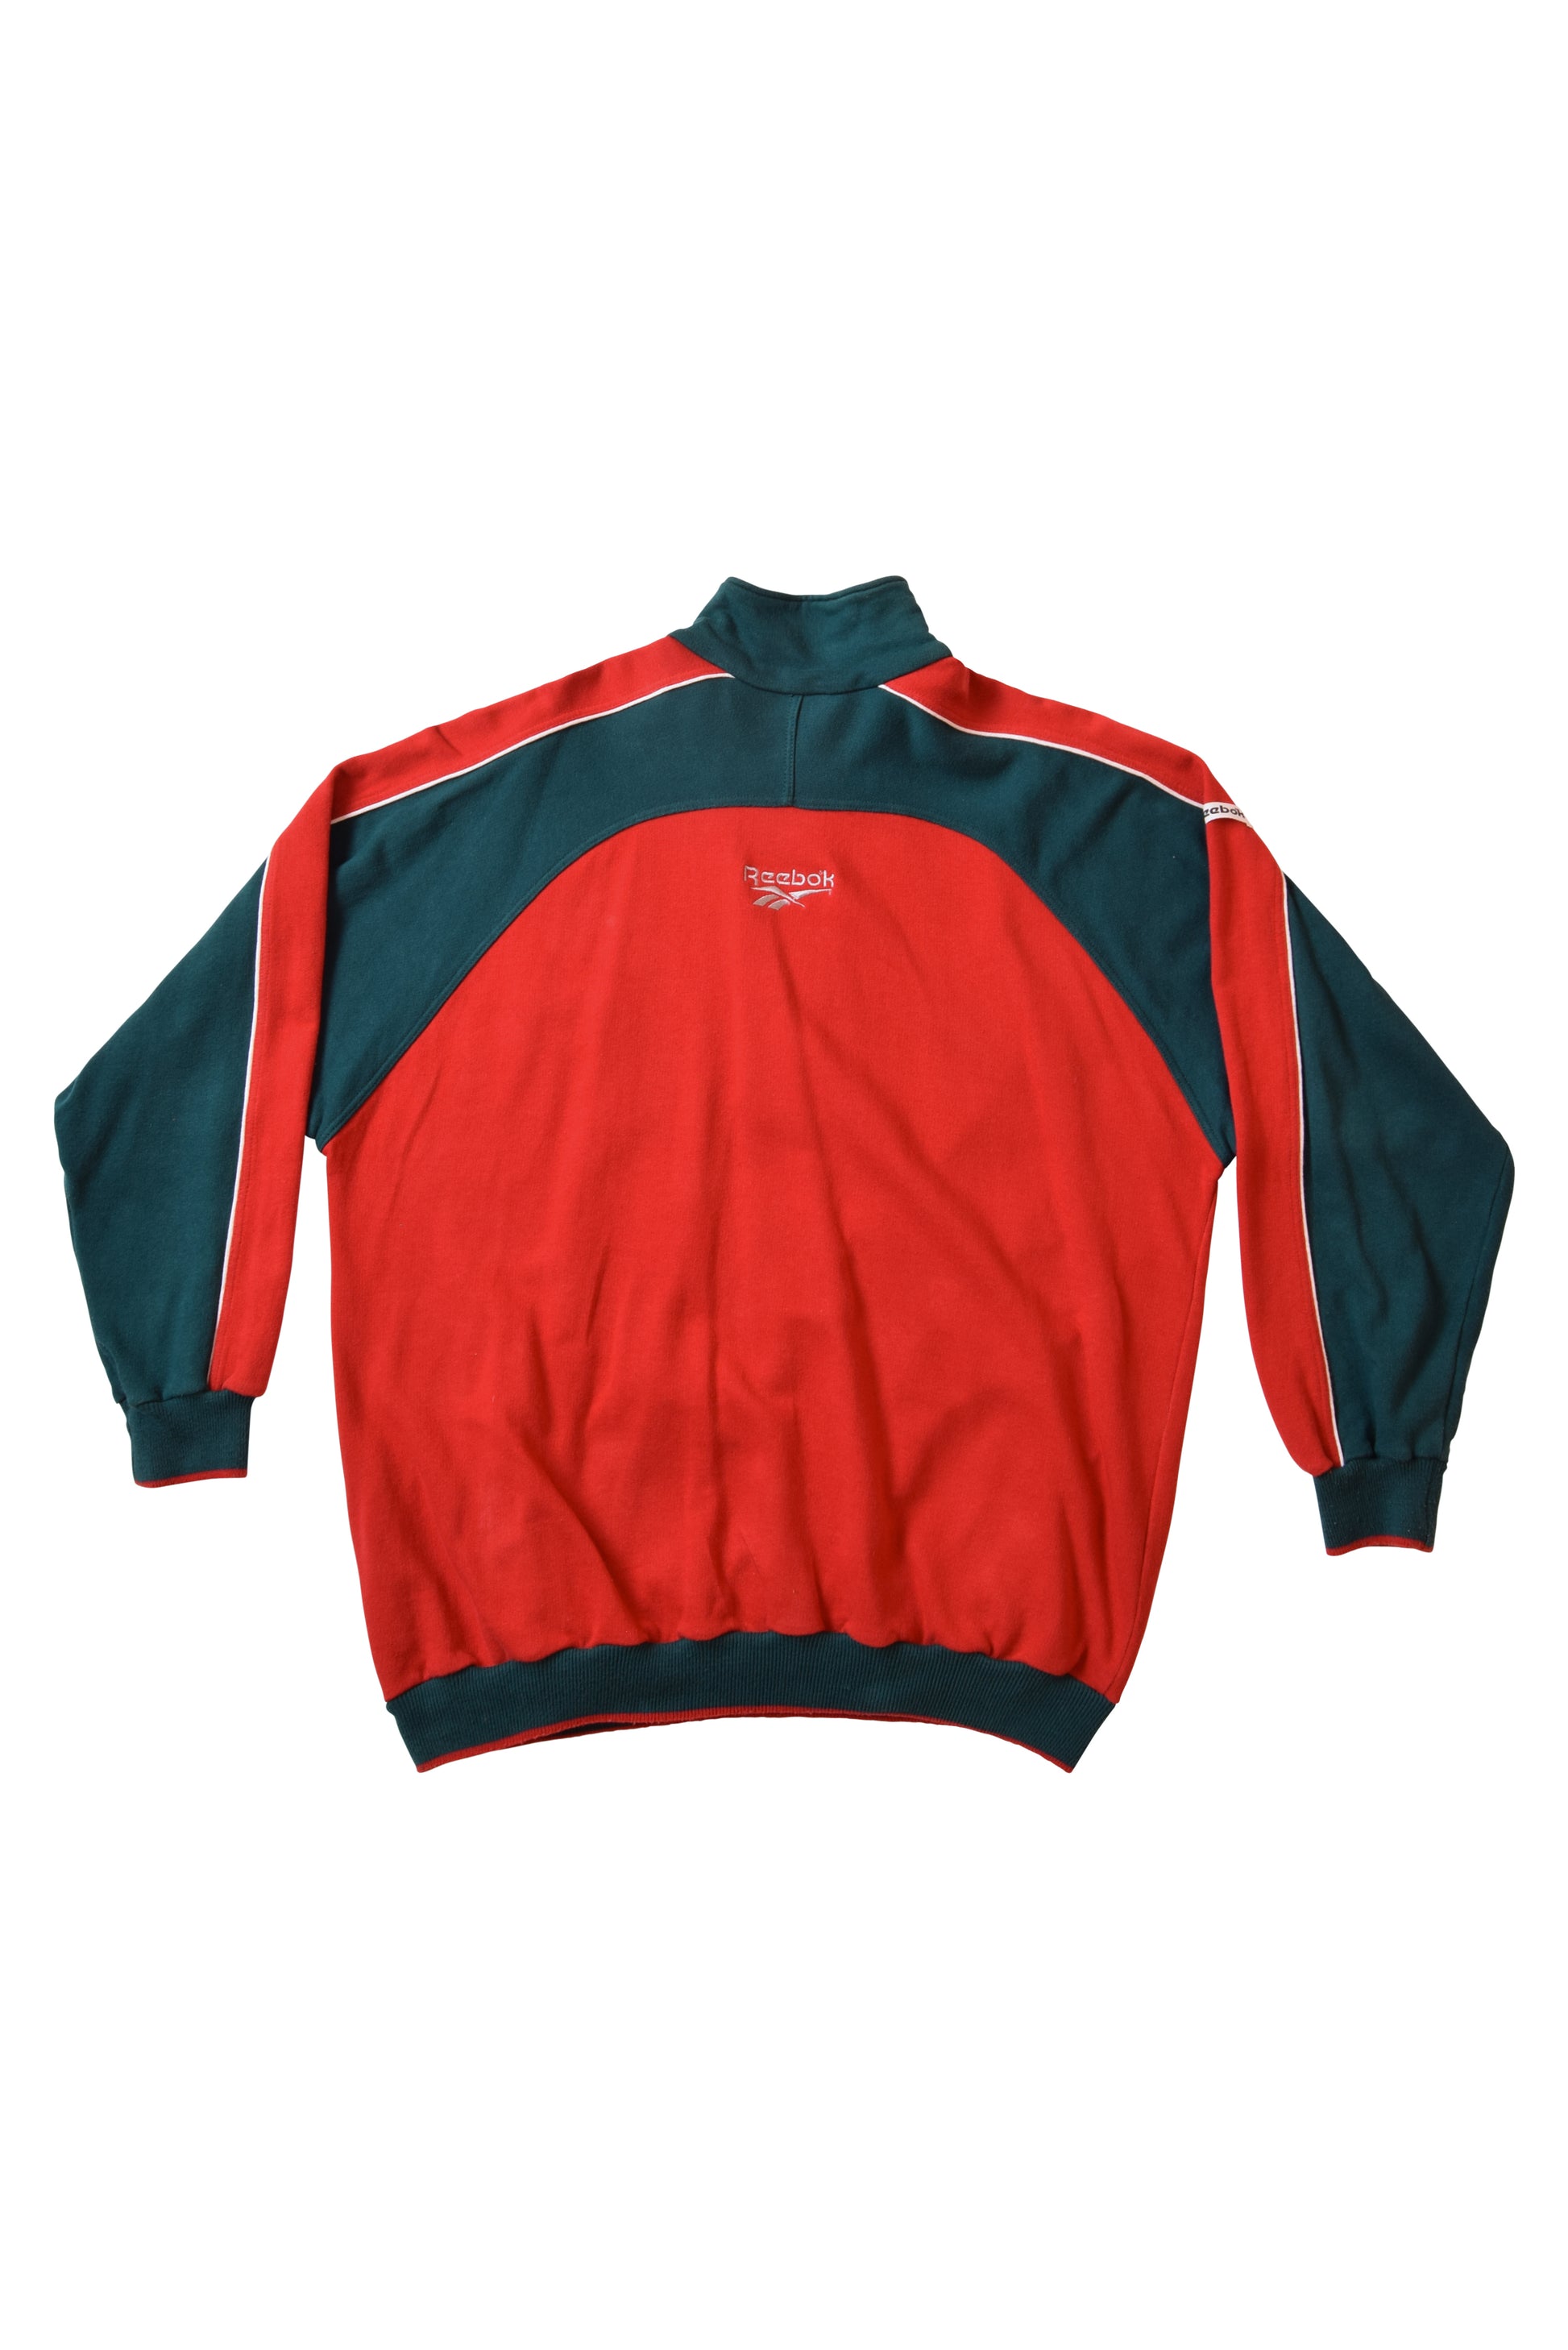 Vintage Reebok 90's Sweatshirt Size XL